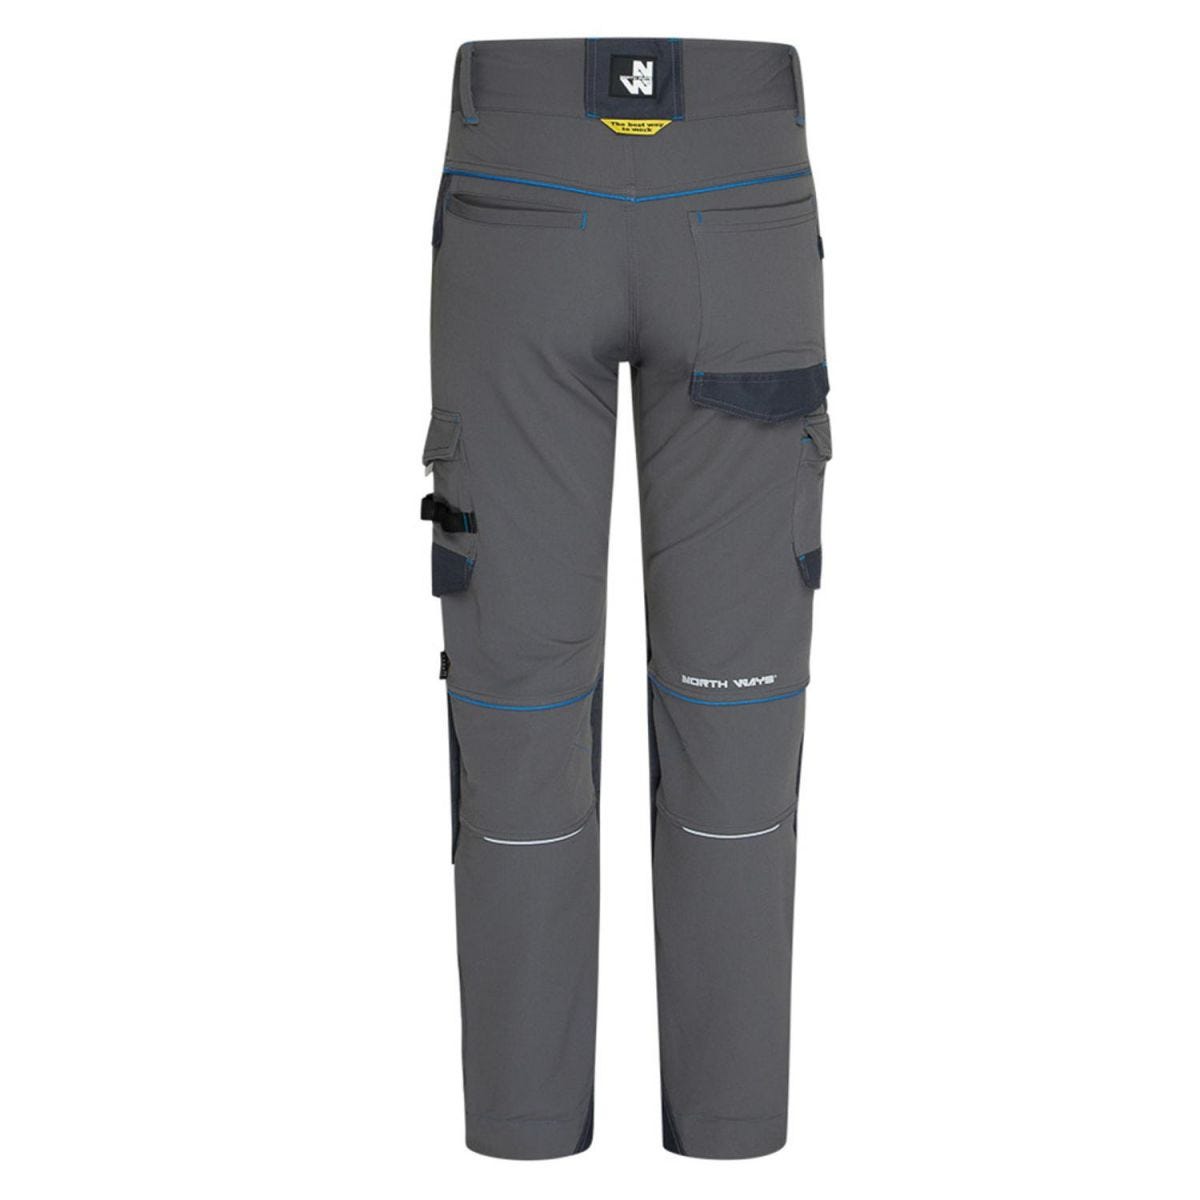 Pantalon de travail SACHA gris/bleu - North Ways - Taille 54 2